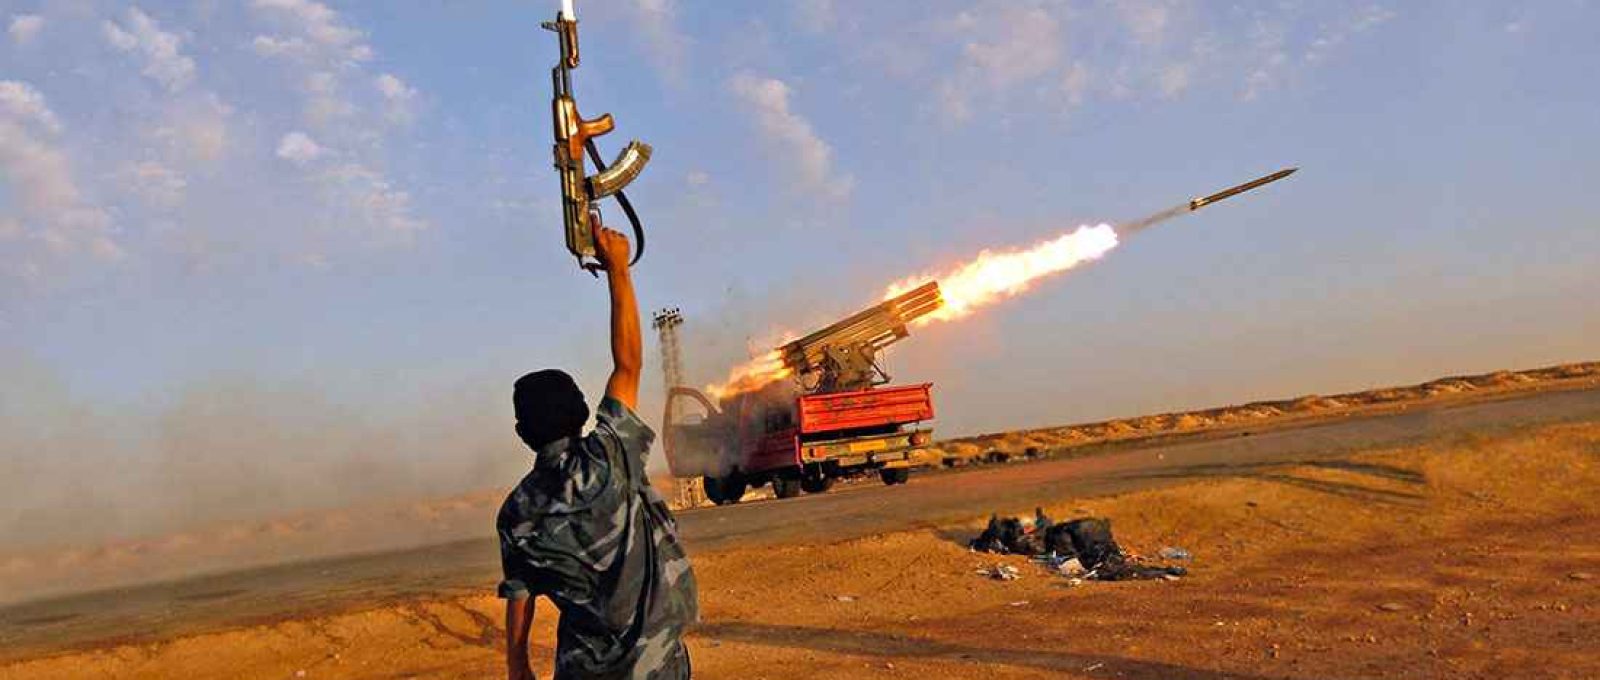 Combatente rebelde comemora o disparo de barragem de foguetes contra tropas leais ao governante líbio Muammar Gaddafi a oeste de Ajdabiyah, na Líbia, 14 de abril de 2011 (Chris Hondros/Getty Images).